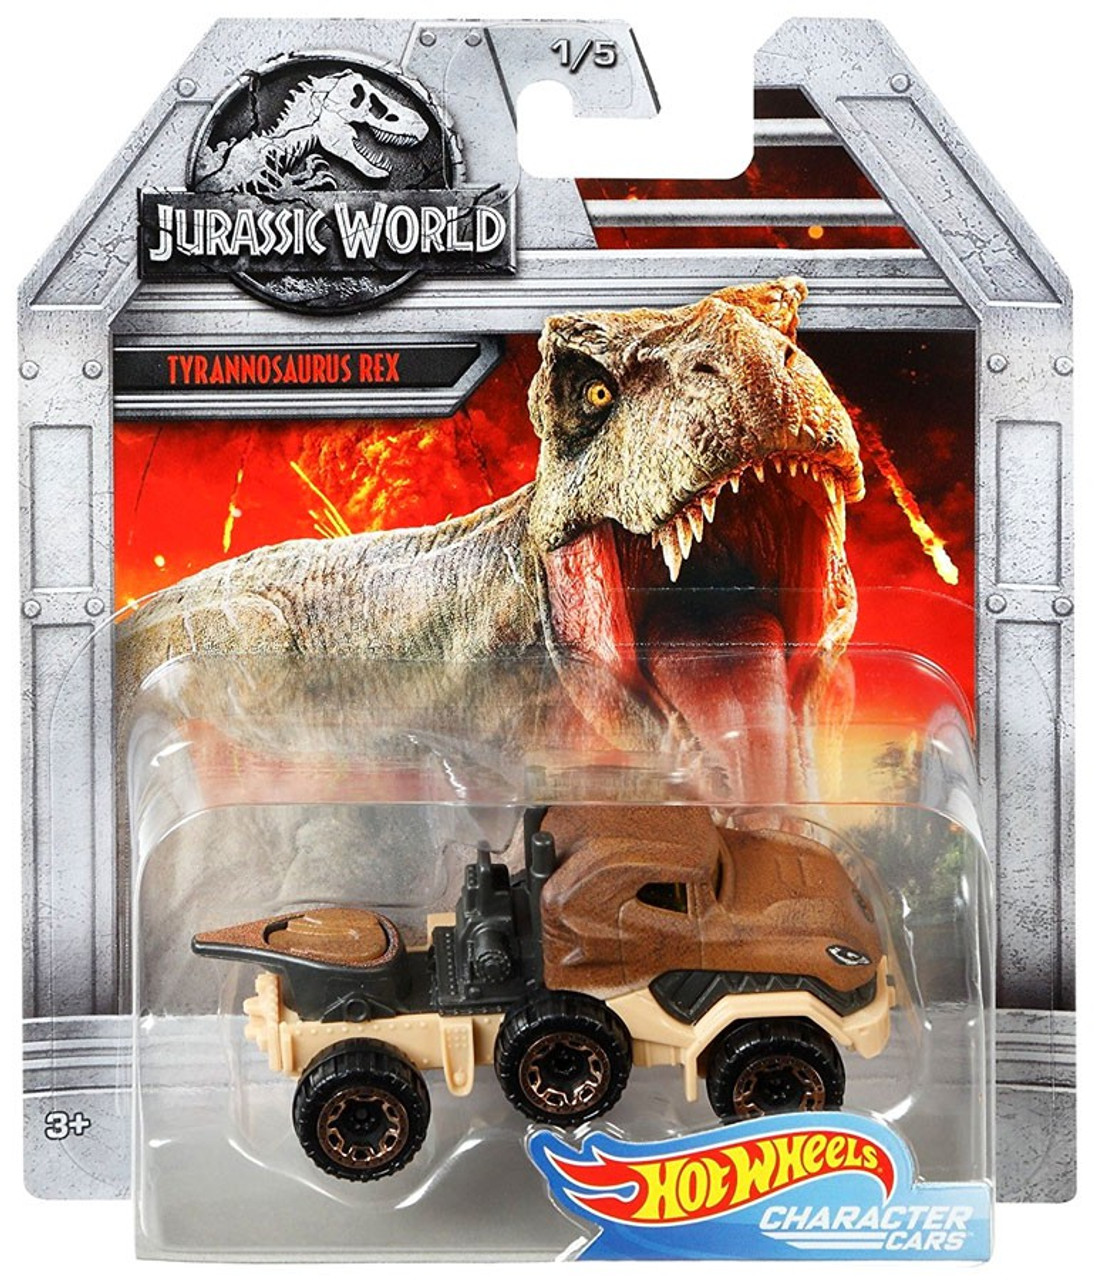 Jurassic World Hot Wheels Character Cars Tyrannosaurus Rex 164 Die Cast Car 15 Mattel Toywiz